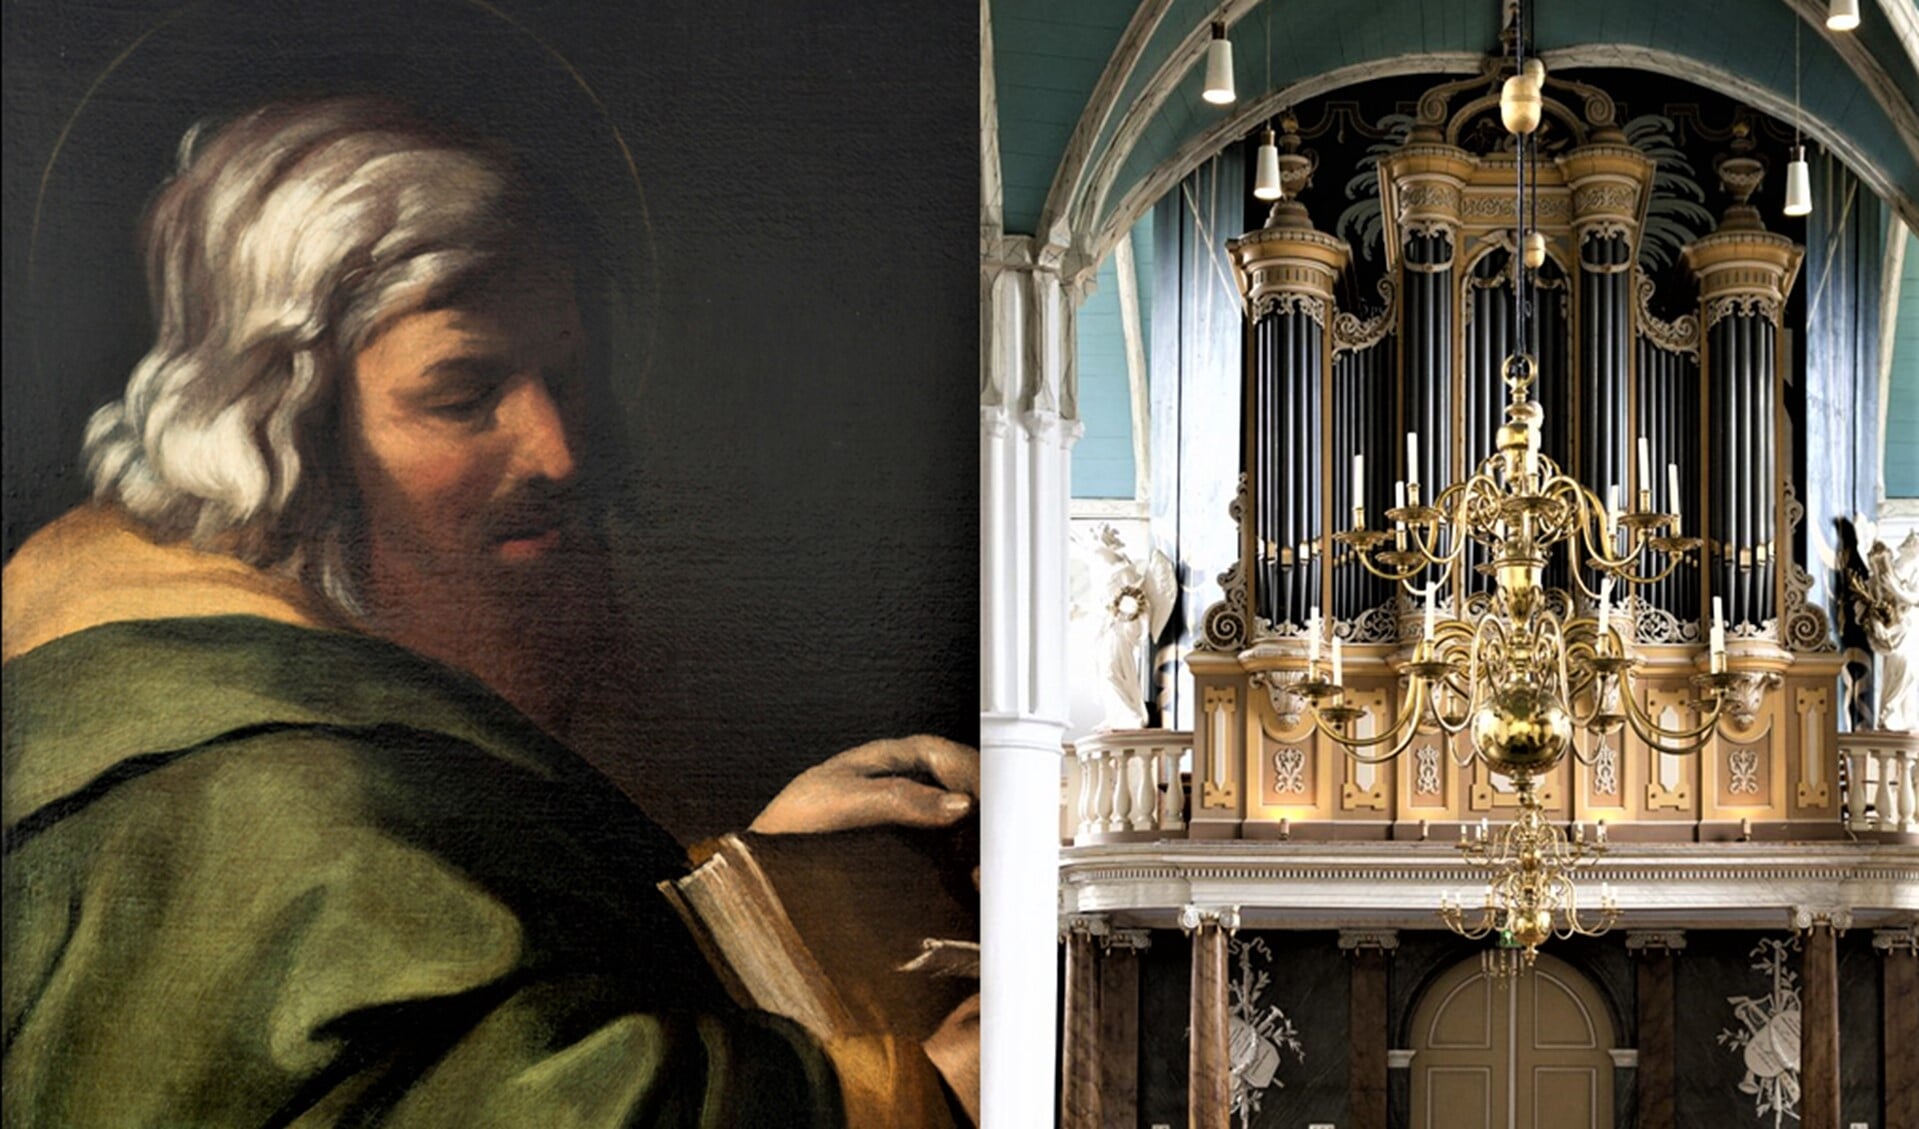 Apostelportret en Bätzorgel in De Oude Kerk (foto's:C. Groeneveld en H. Houtman).